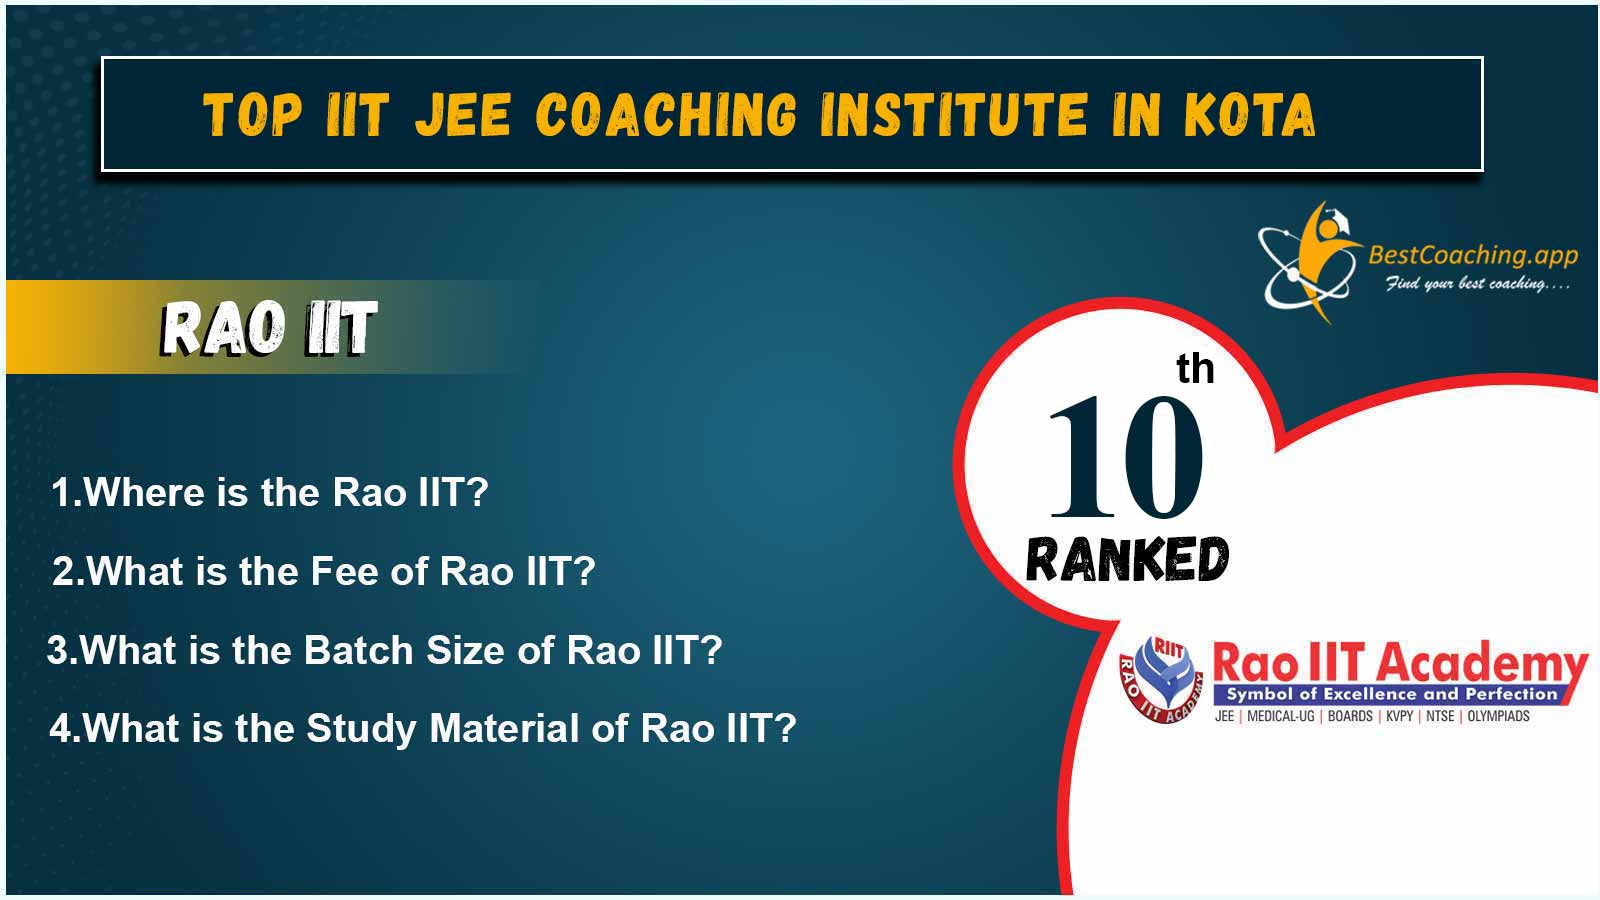 Top IIT JEE Coaching of Kota